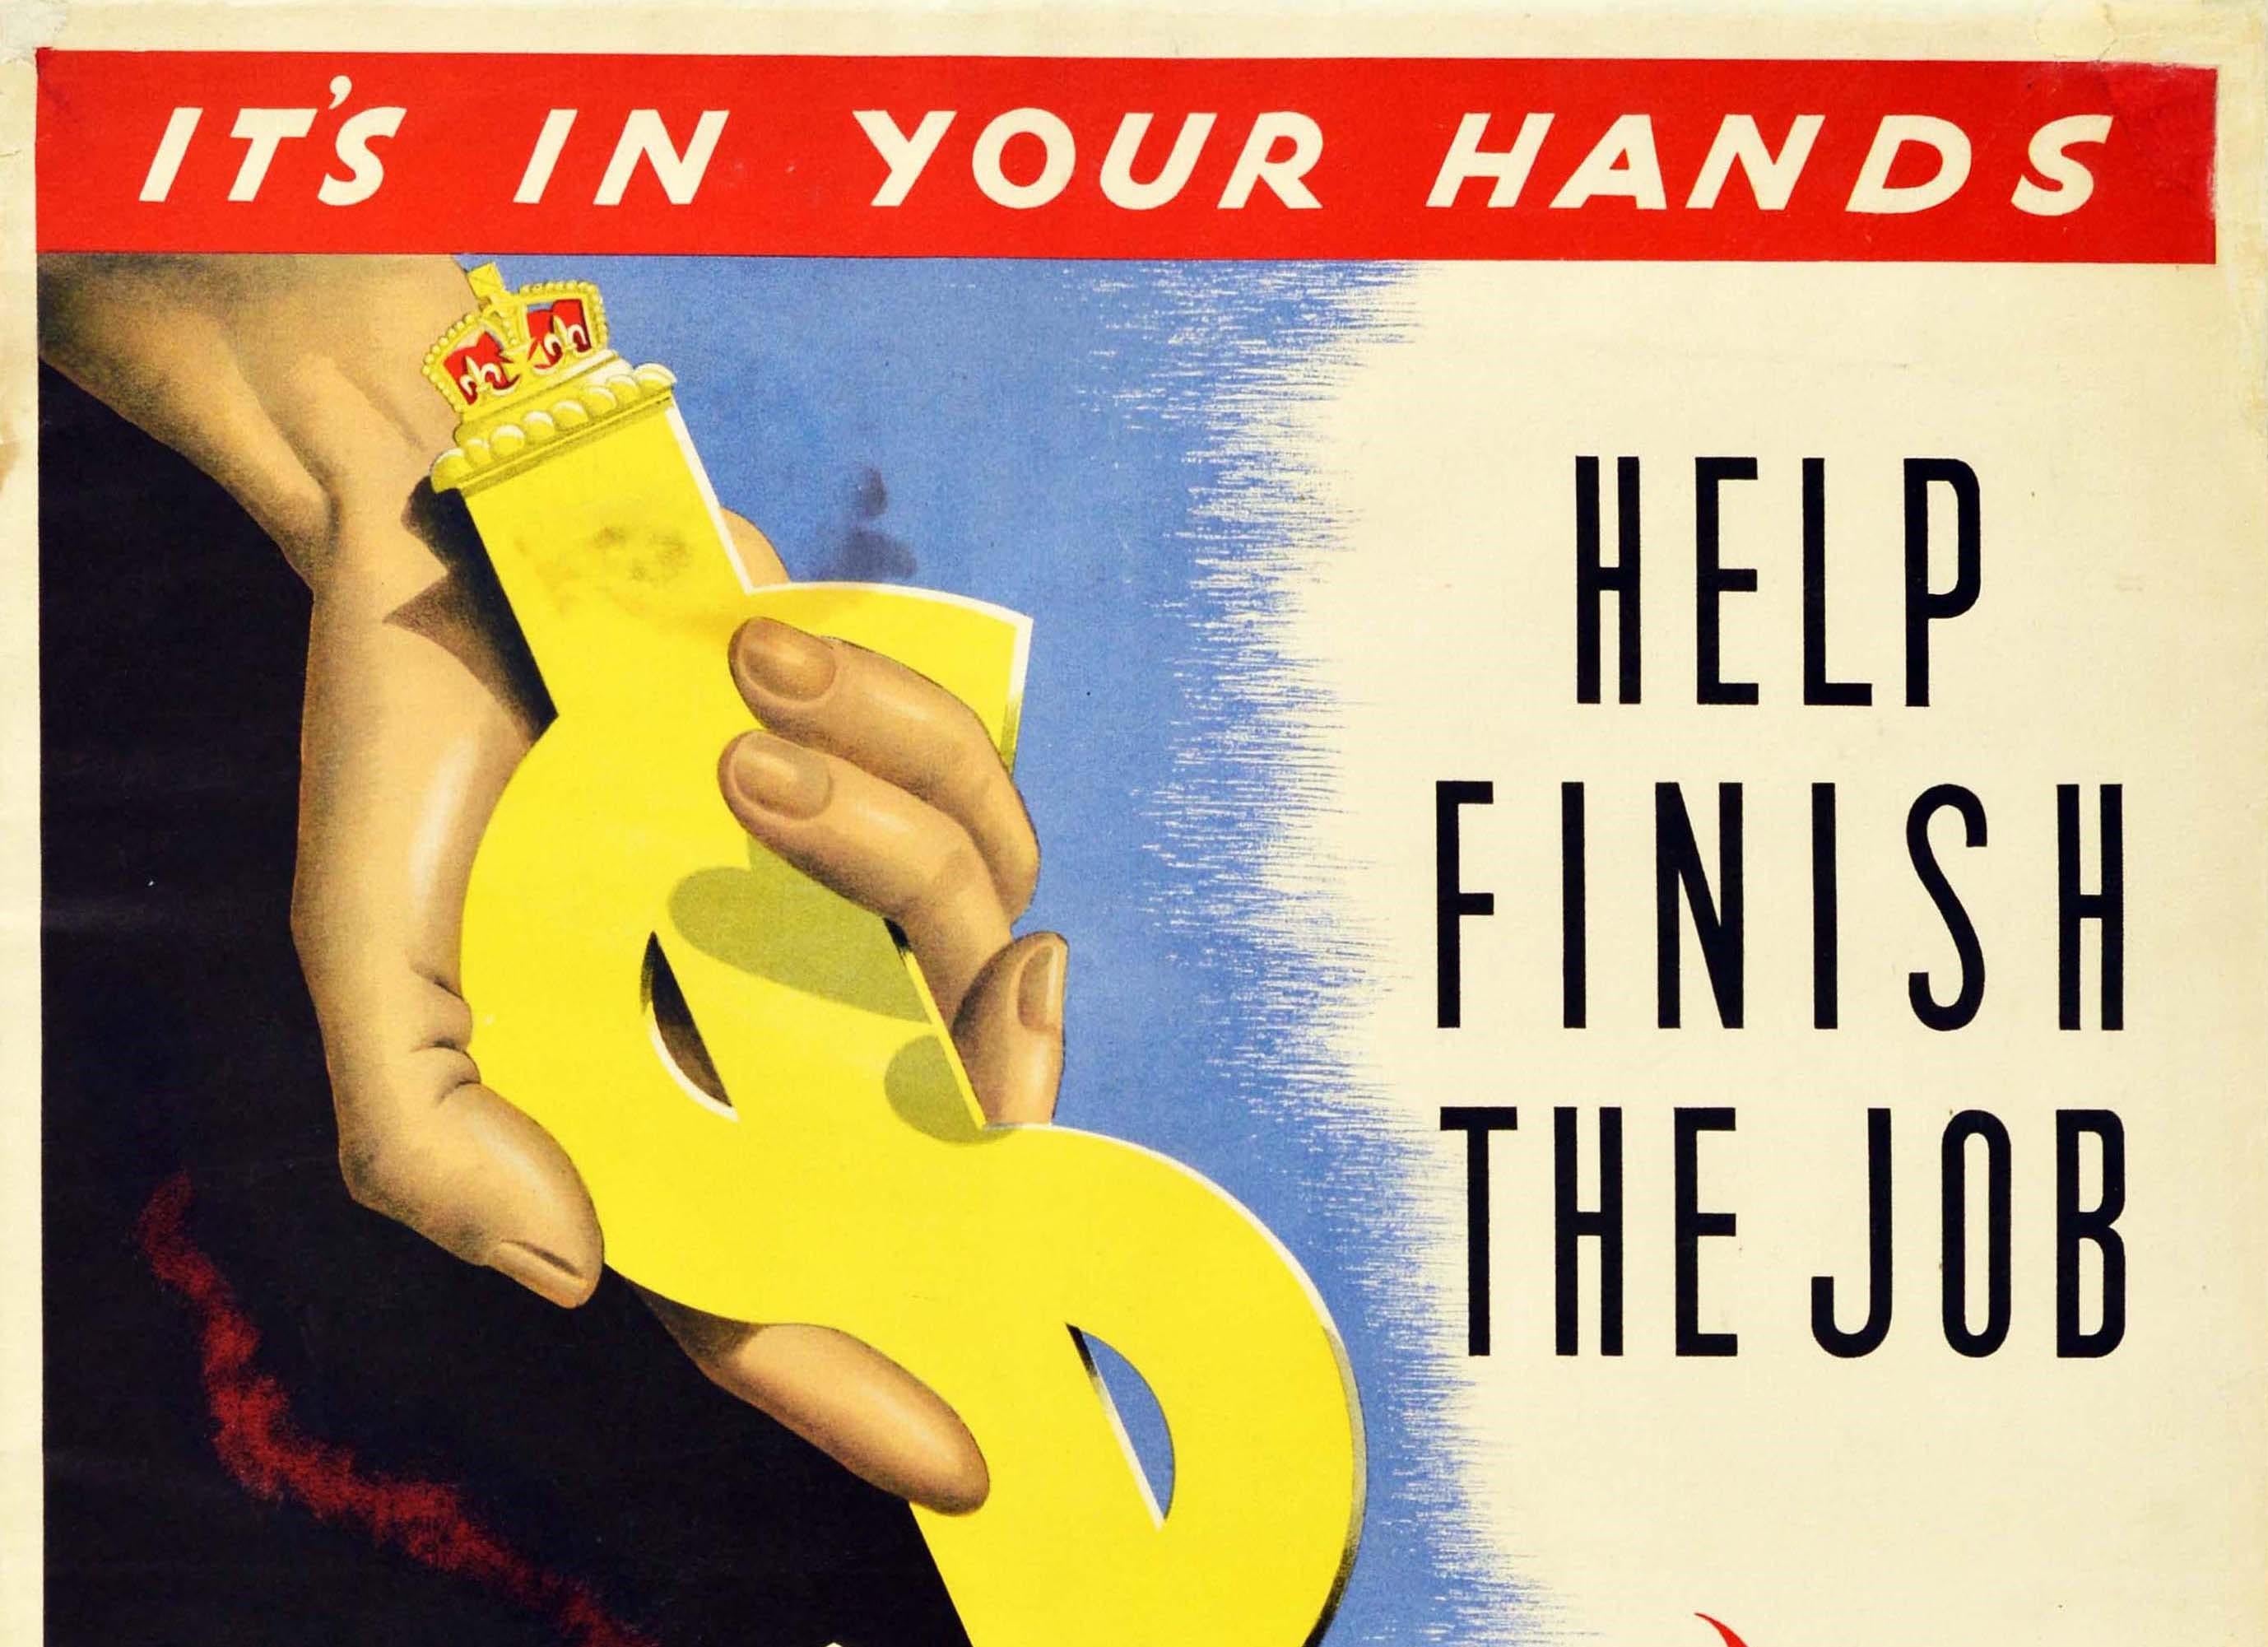 Original Vintage Canadian WWII Poster Help Finish The Job Buy Victory Bonds - Print by L. Trevor